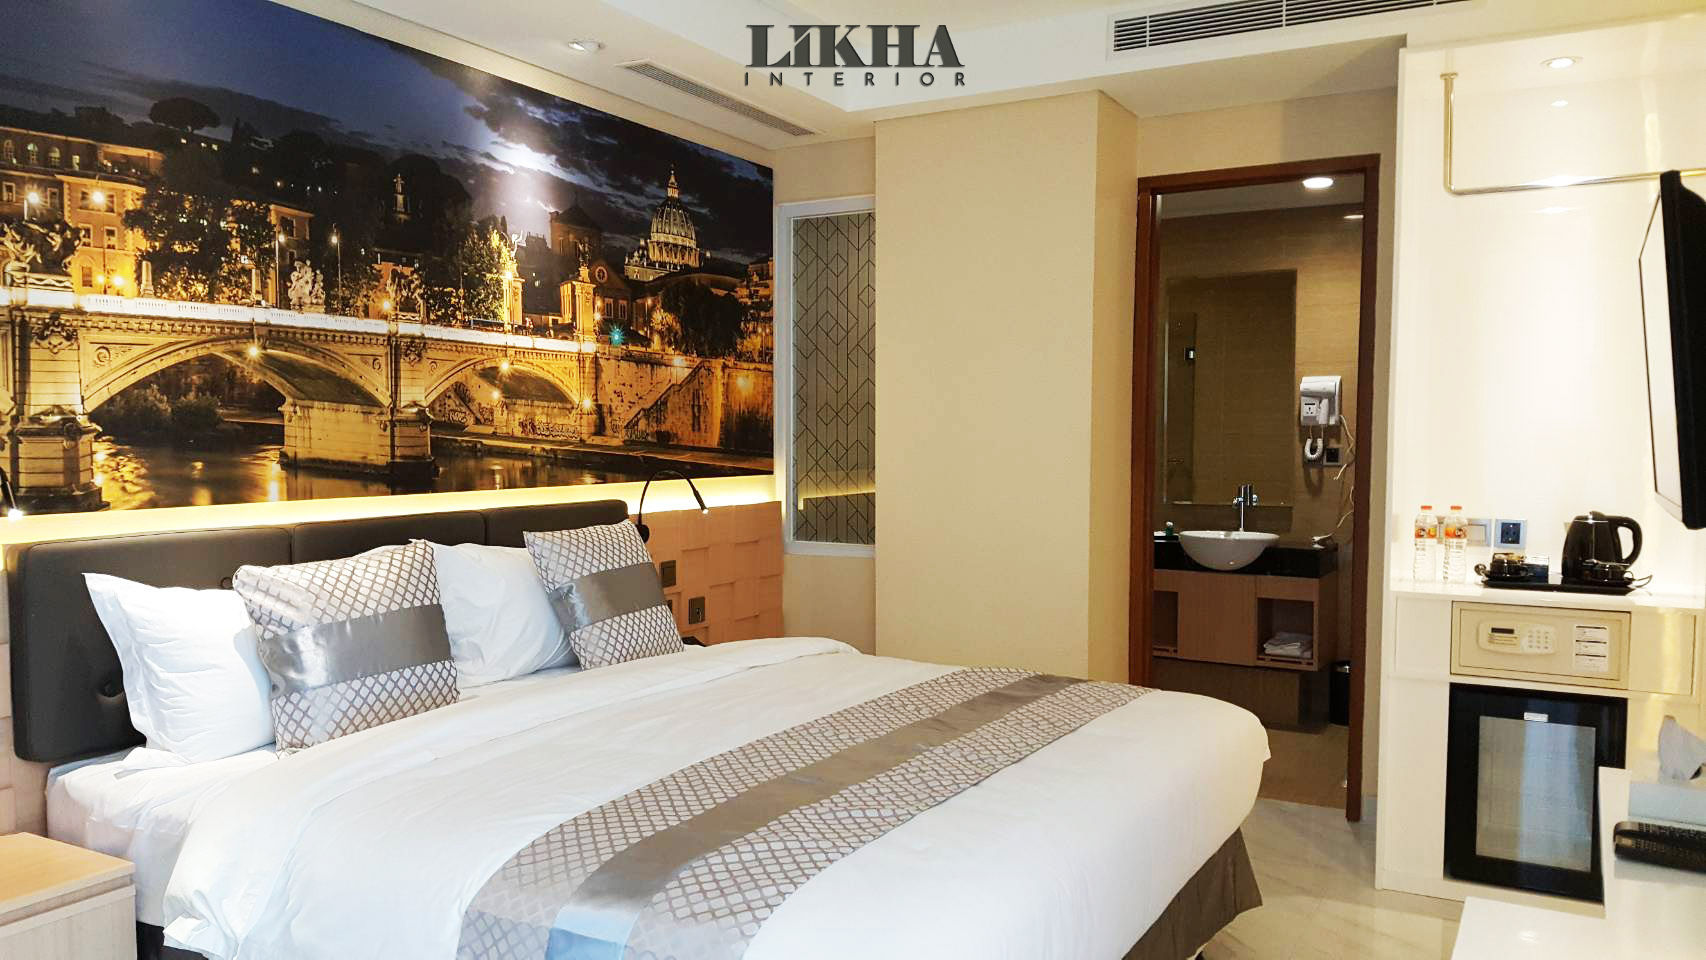 HOTEL ELEGAN DAN NYAMAN di Grand Viveana, Likha Interior Likha Interior 商业空间 合板 飯店